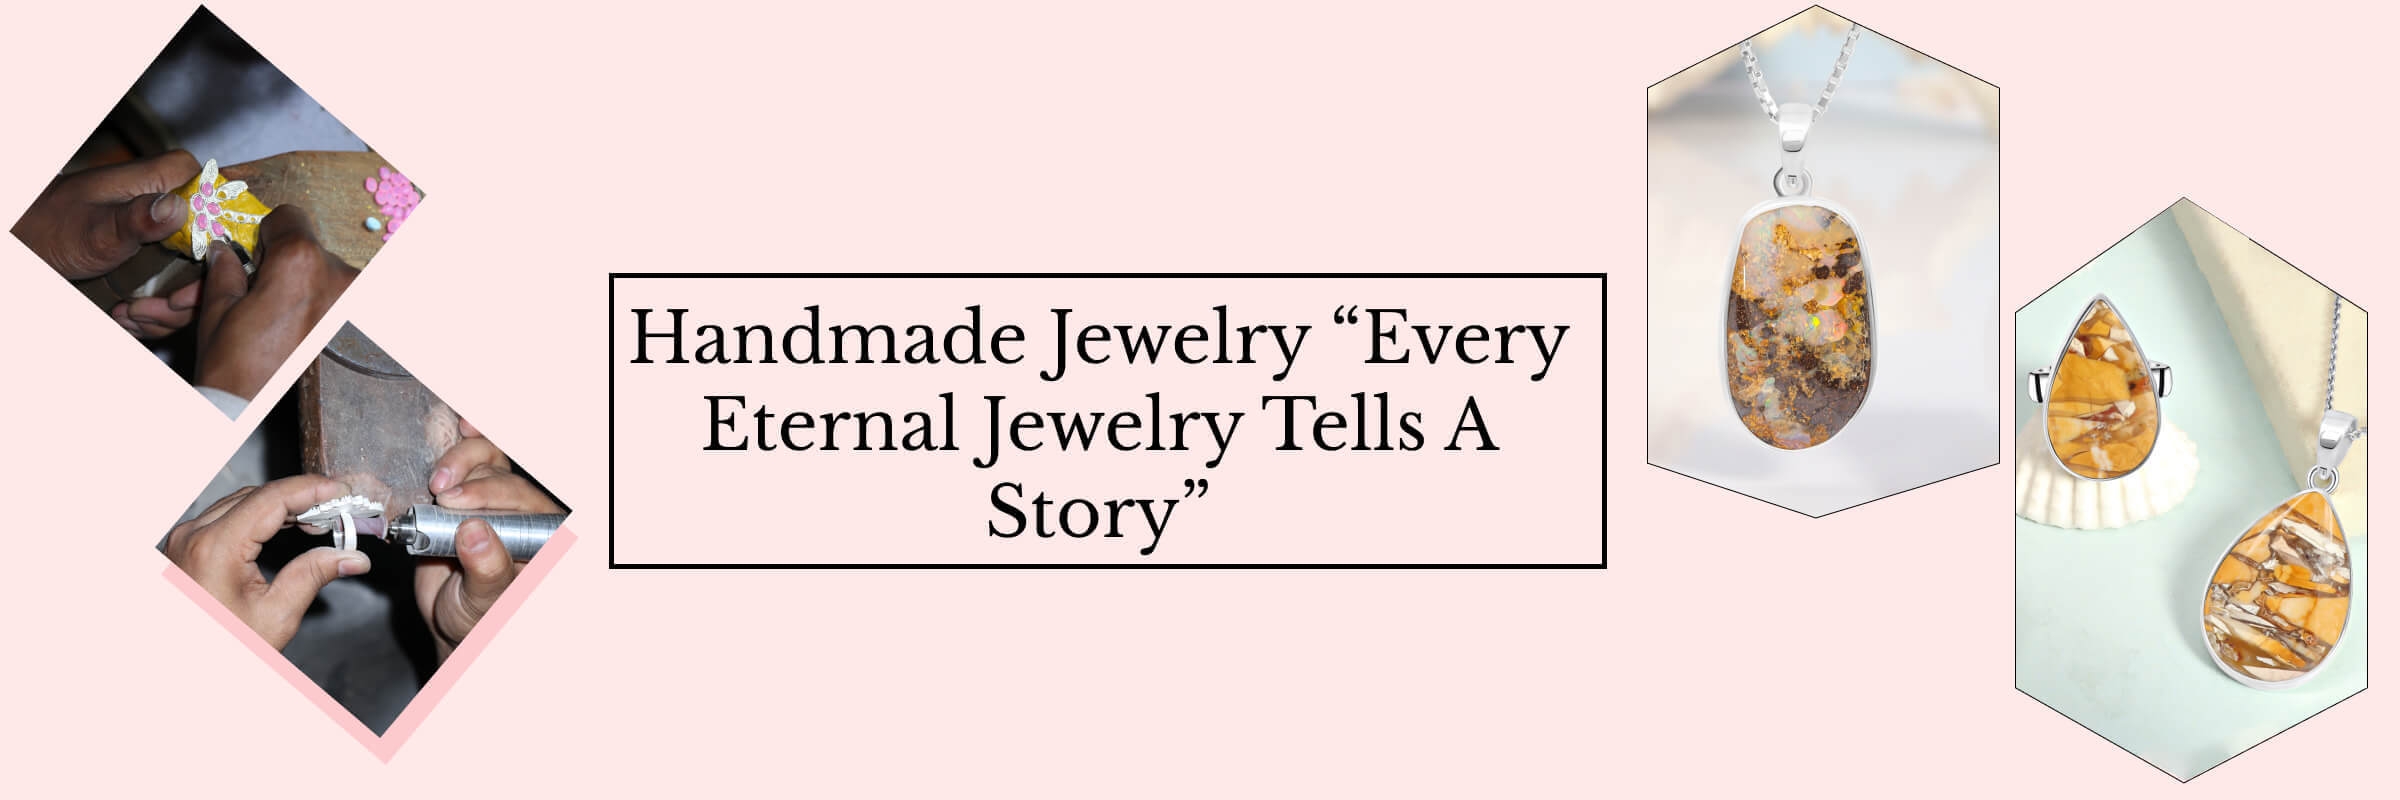 Handmade Jewelry Facts